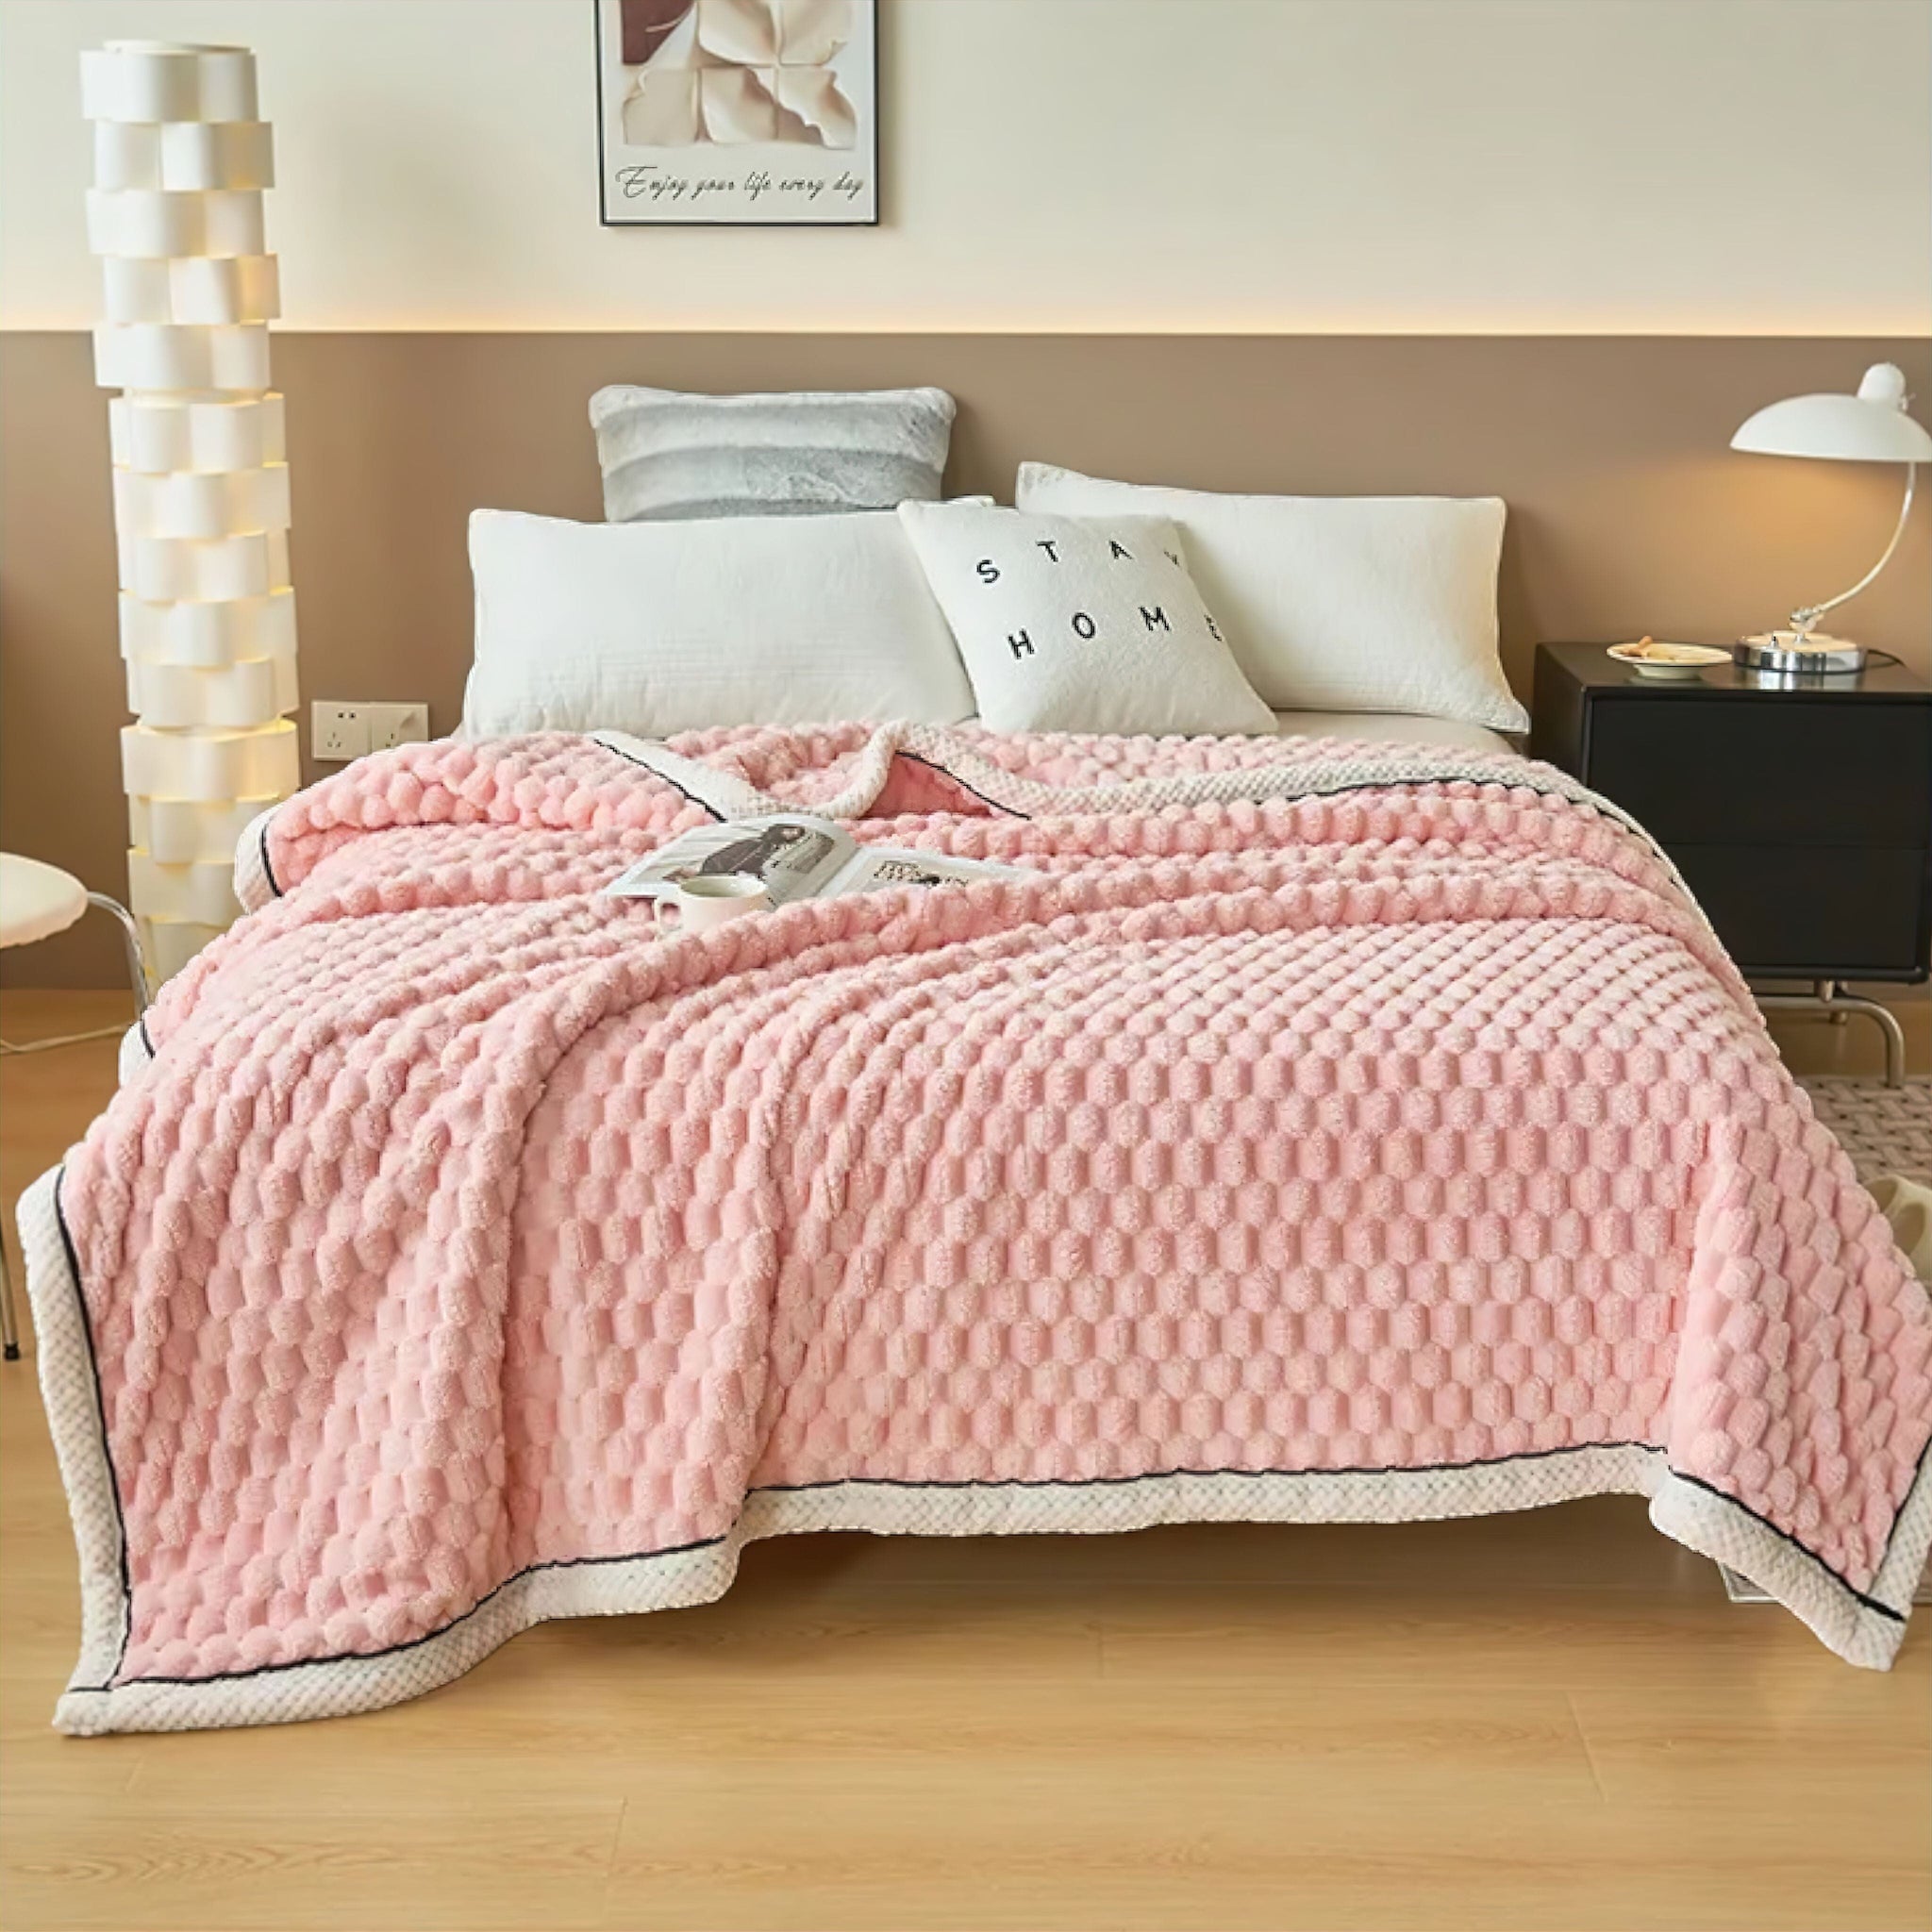 Nino Blanket Pink 120 x 200cm 